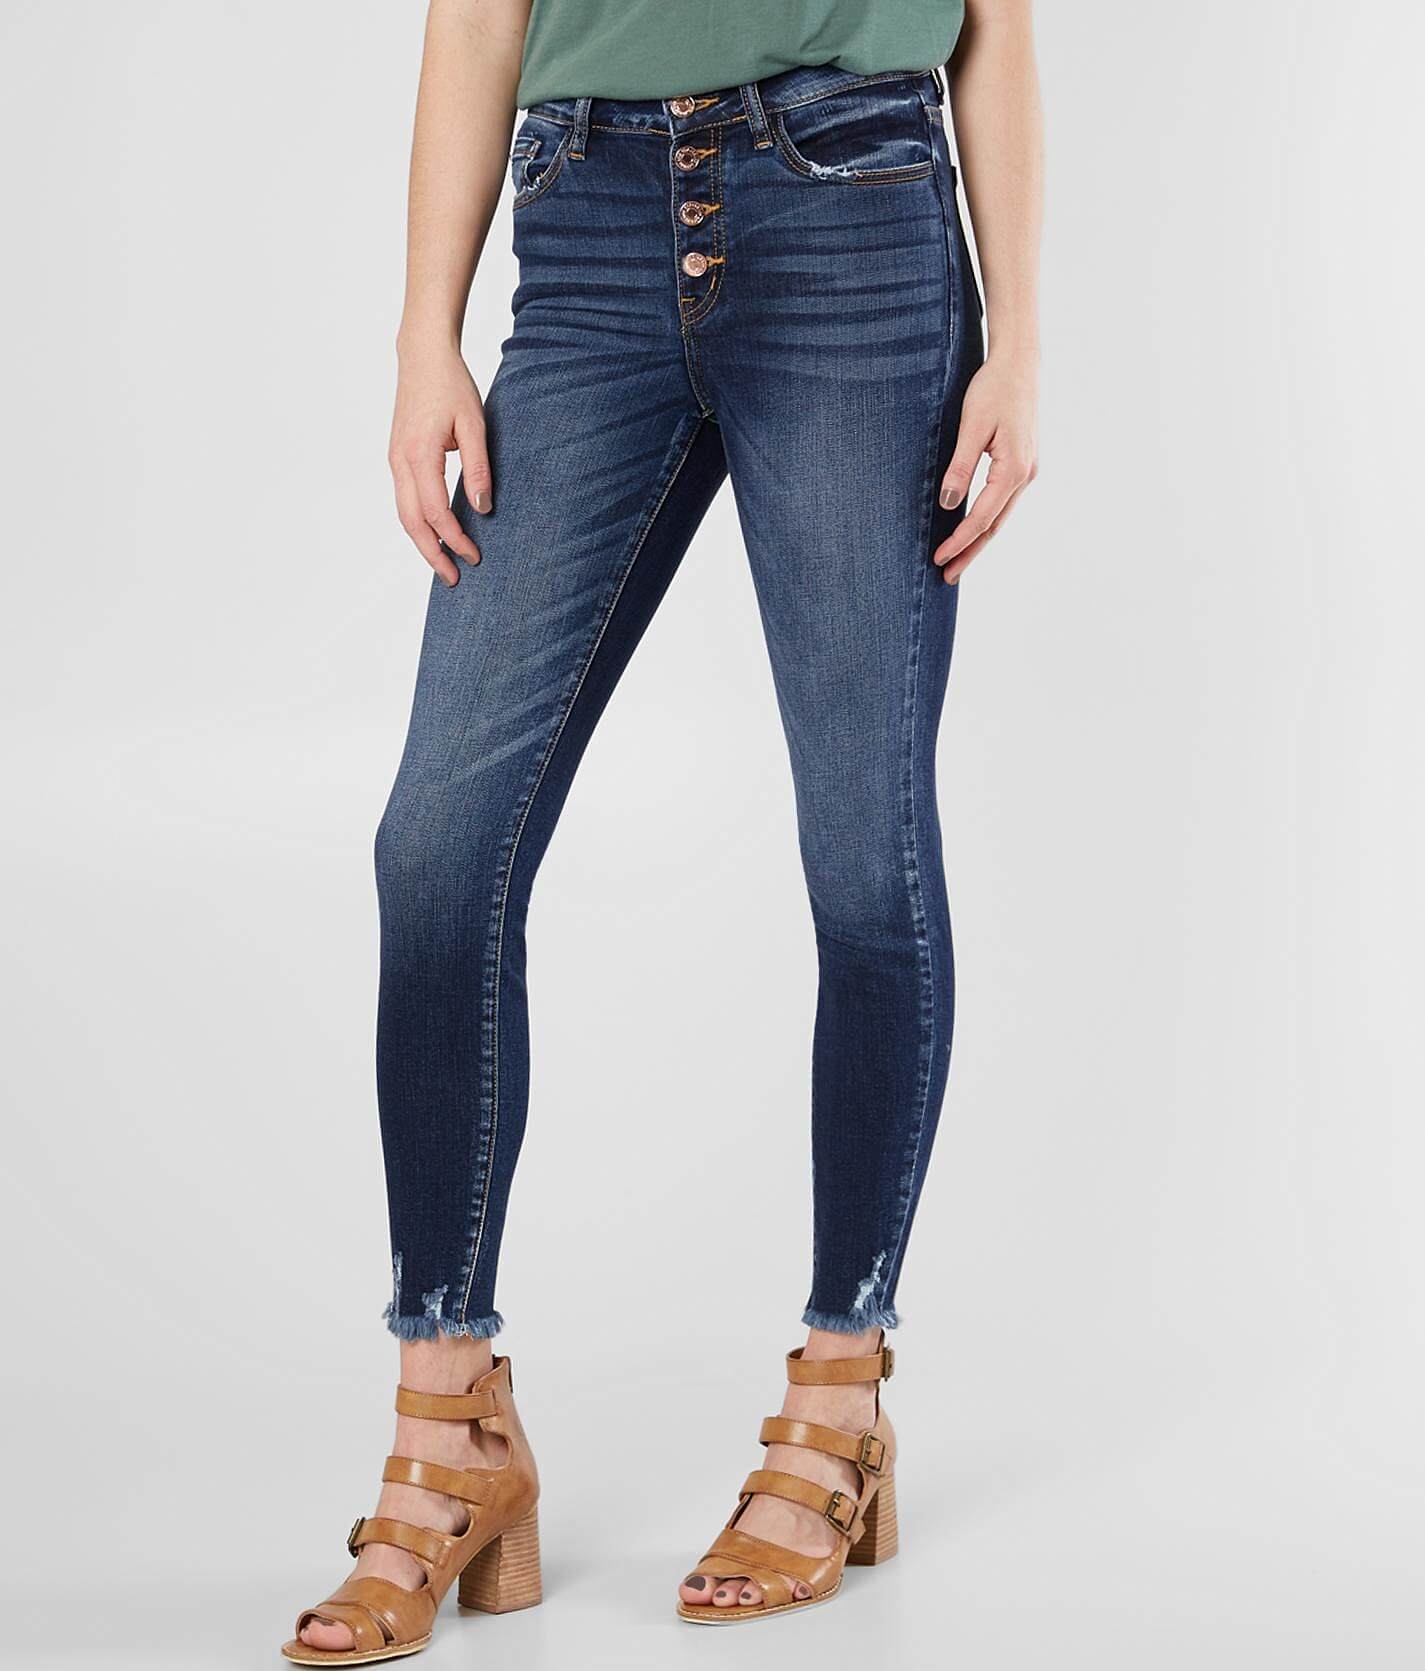 kancan frayed jeans